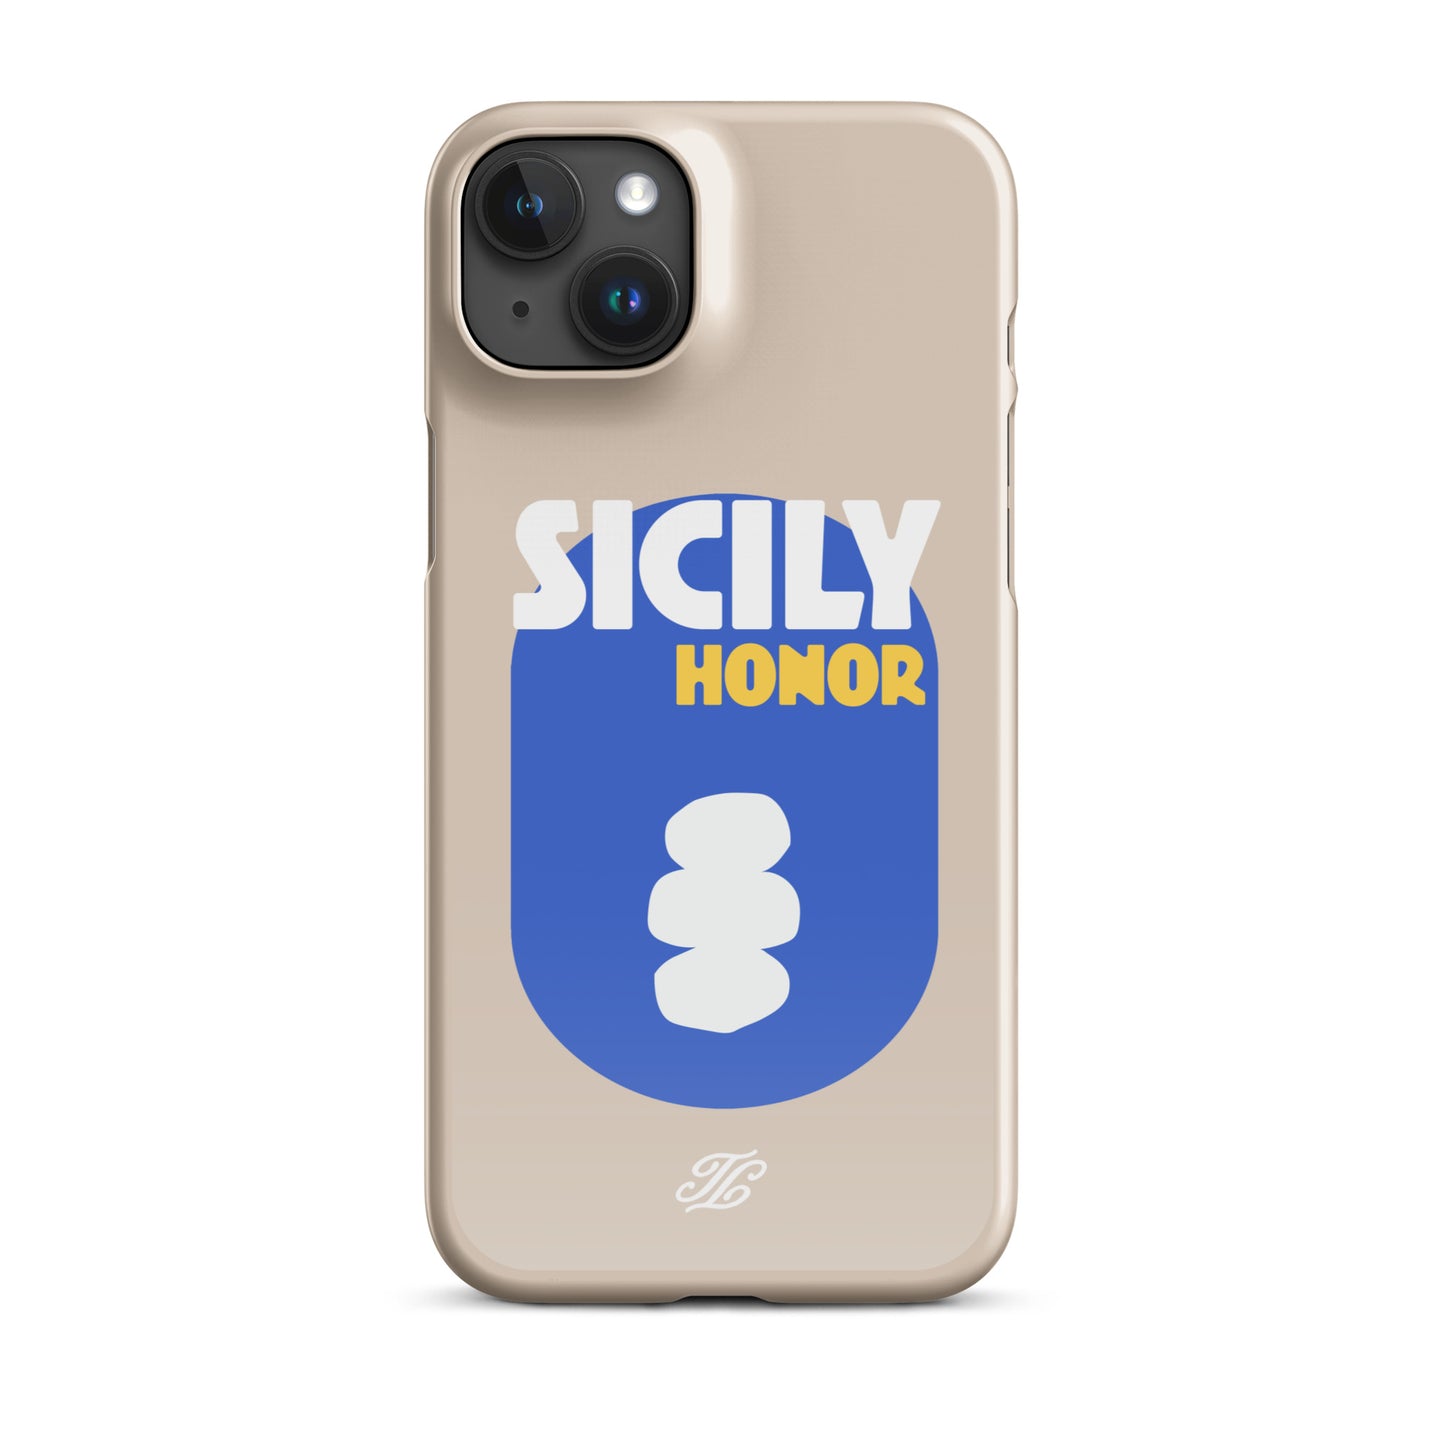 Sicily Italy iPhone® case